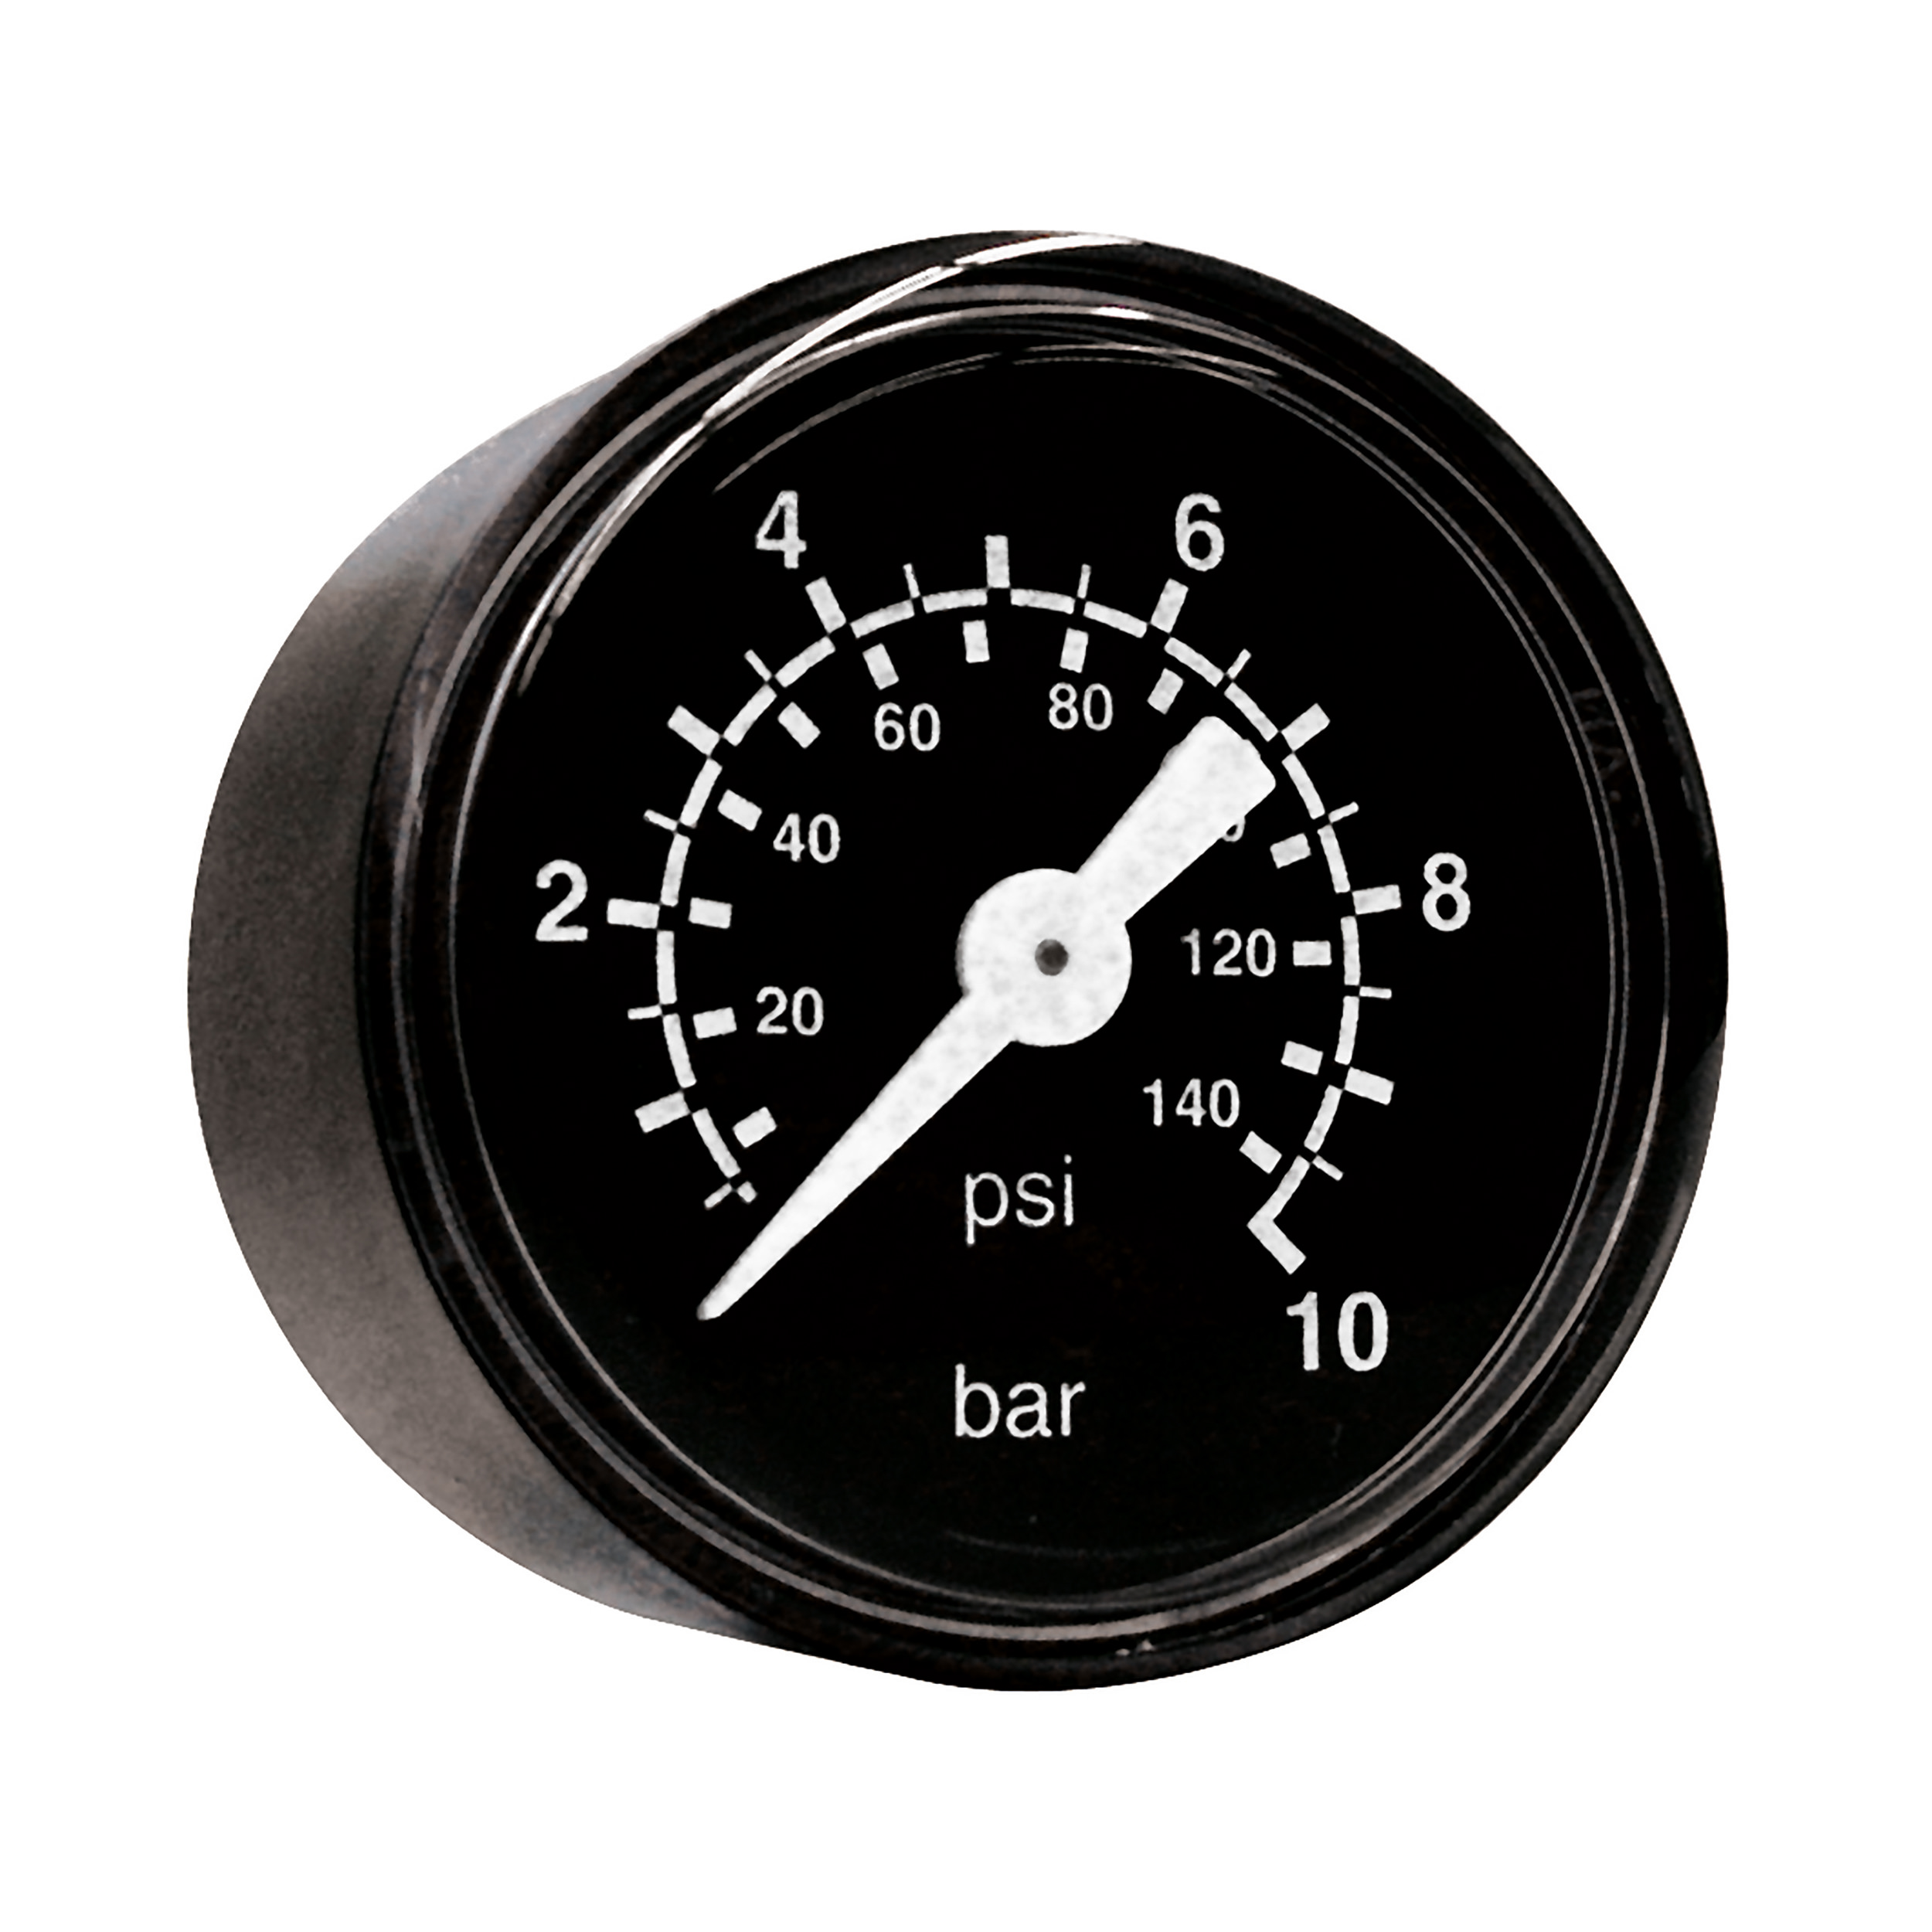 Bourdon-tube gauge Ø40, class 2.5, base/imprint: black/white, horizontal connection: G¼, display range: 0–145 psi